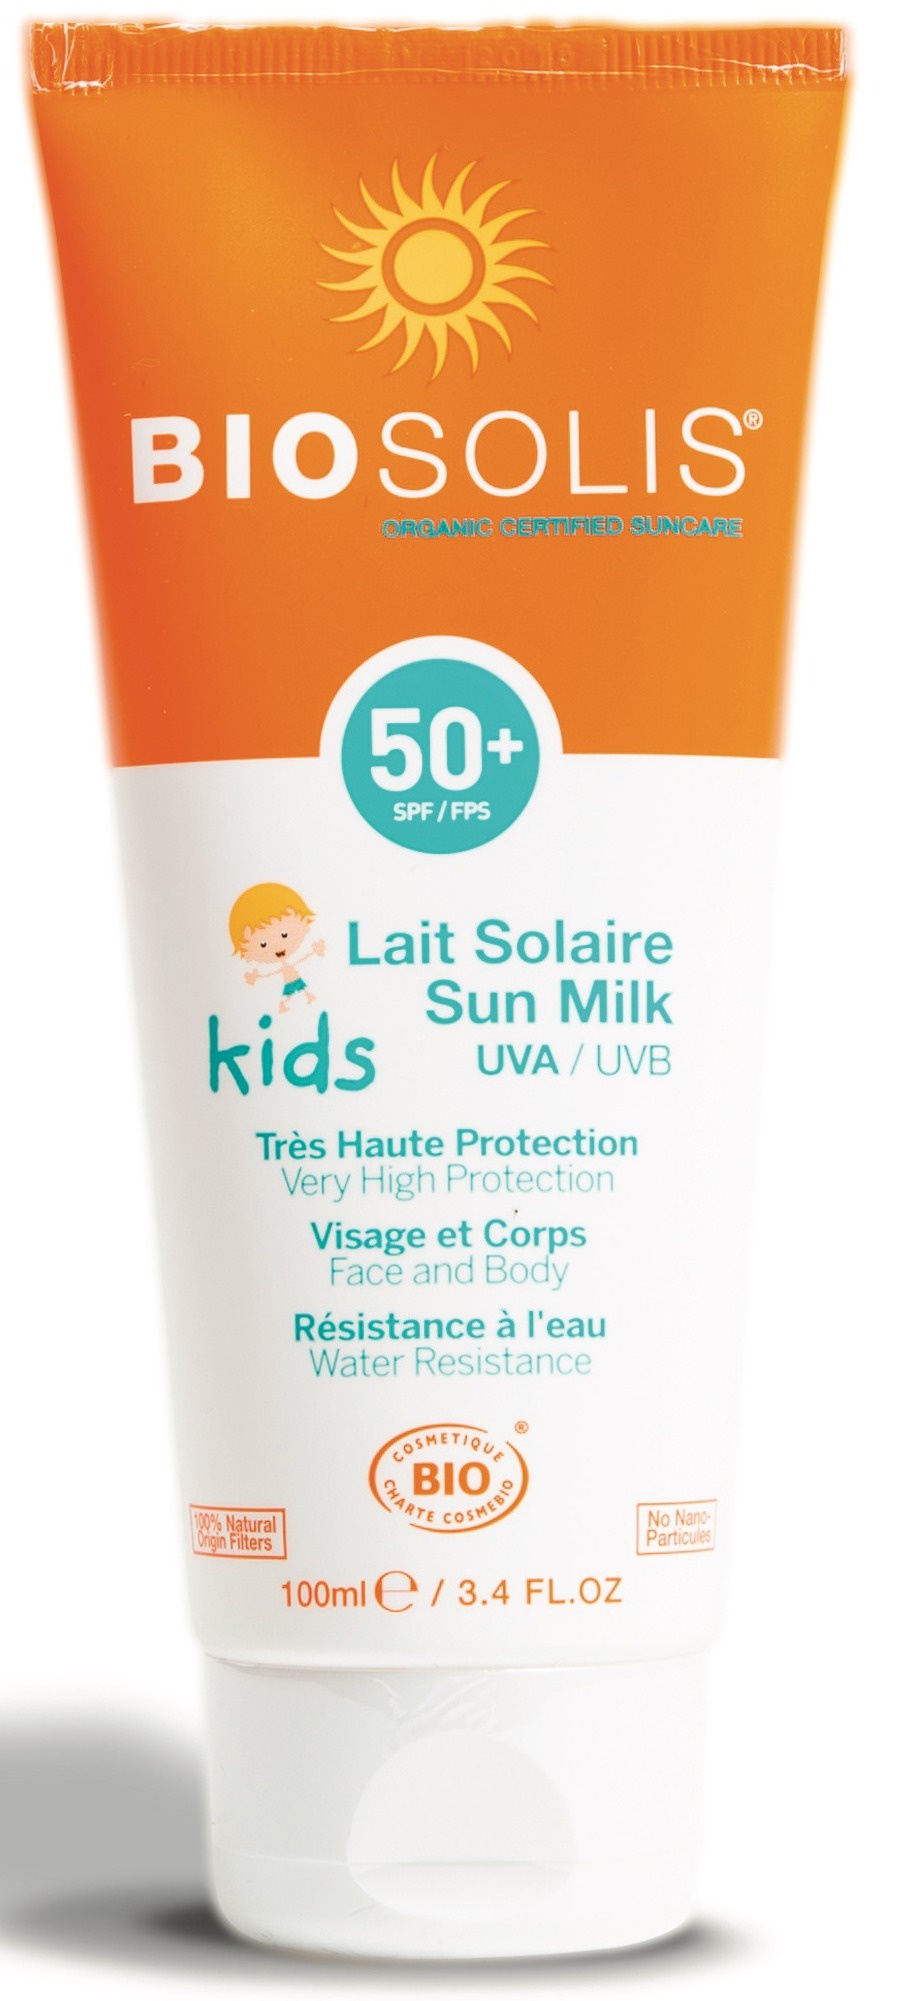 Biosolis Baby & Kids Sun Milk SPF 50+